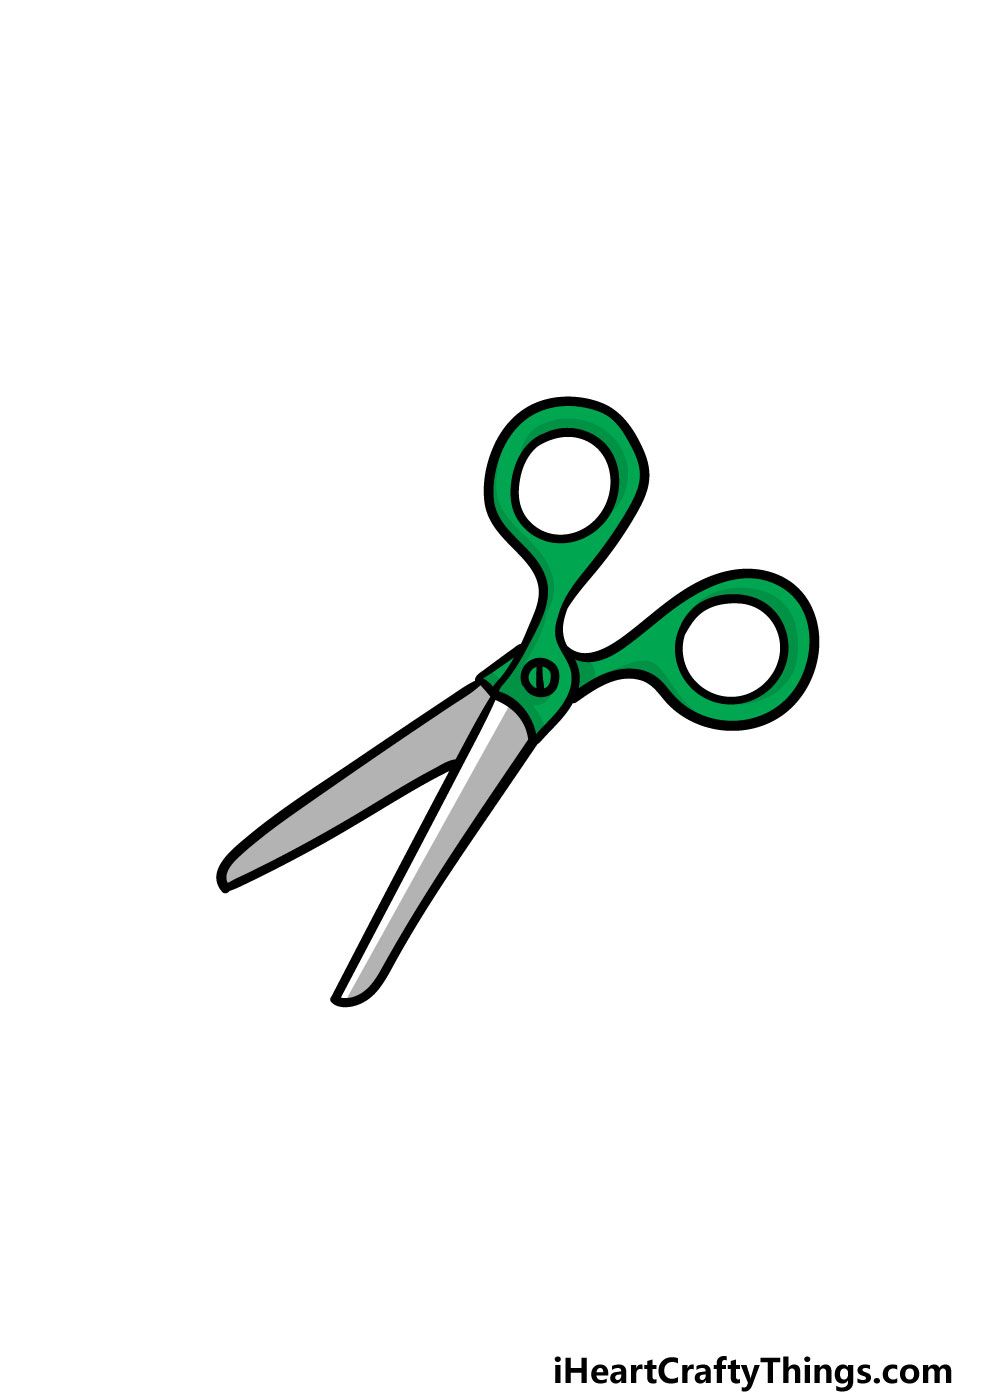 drawing scissors step 6